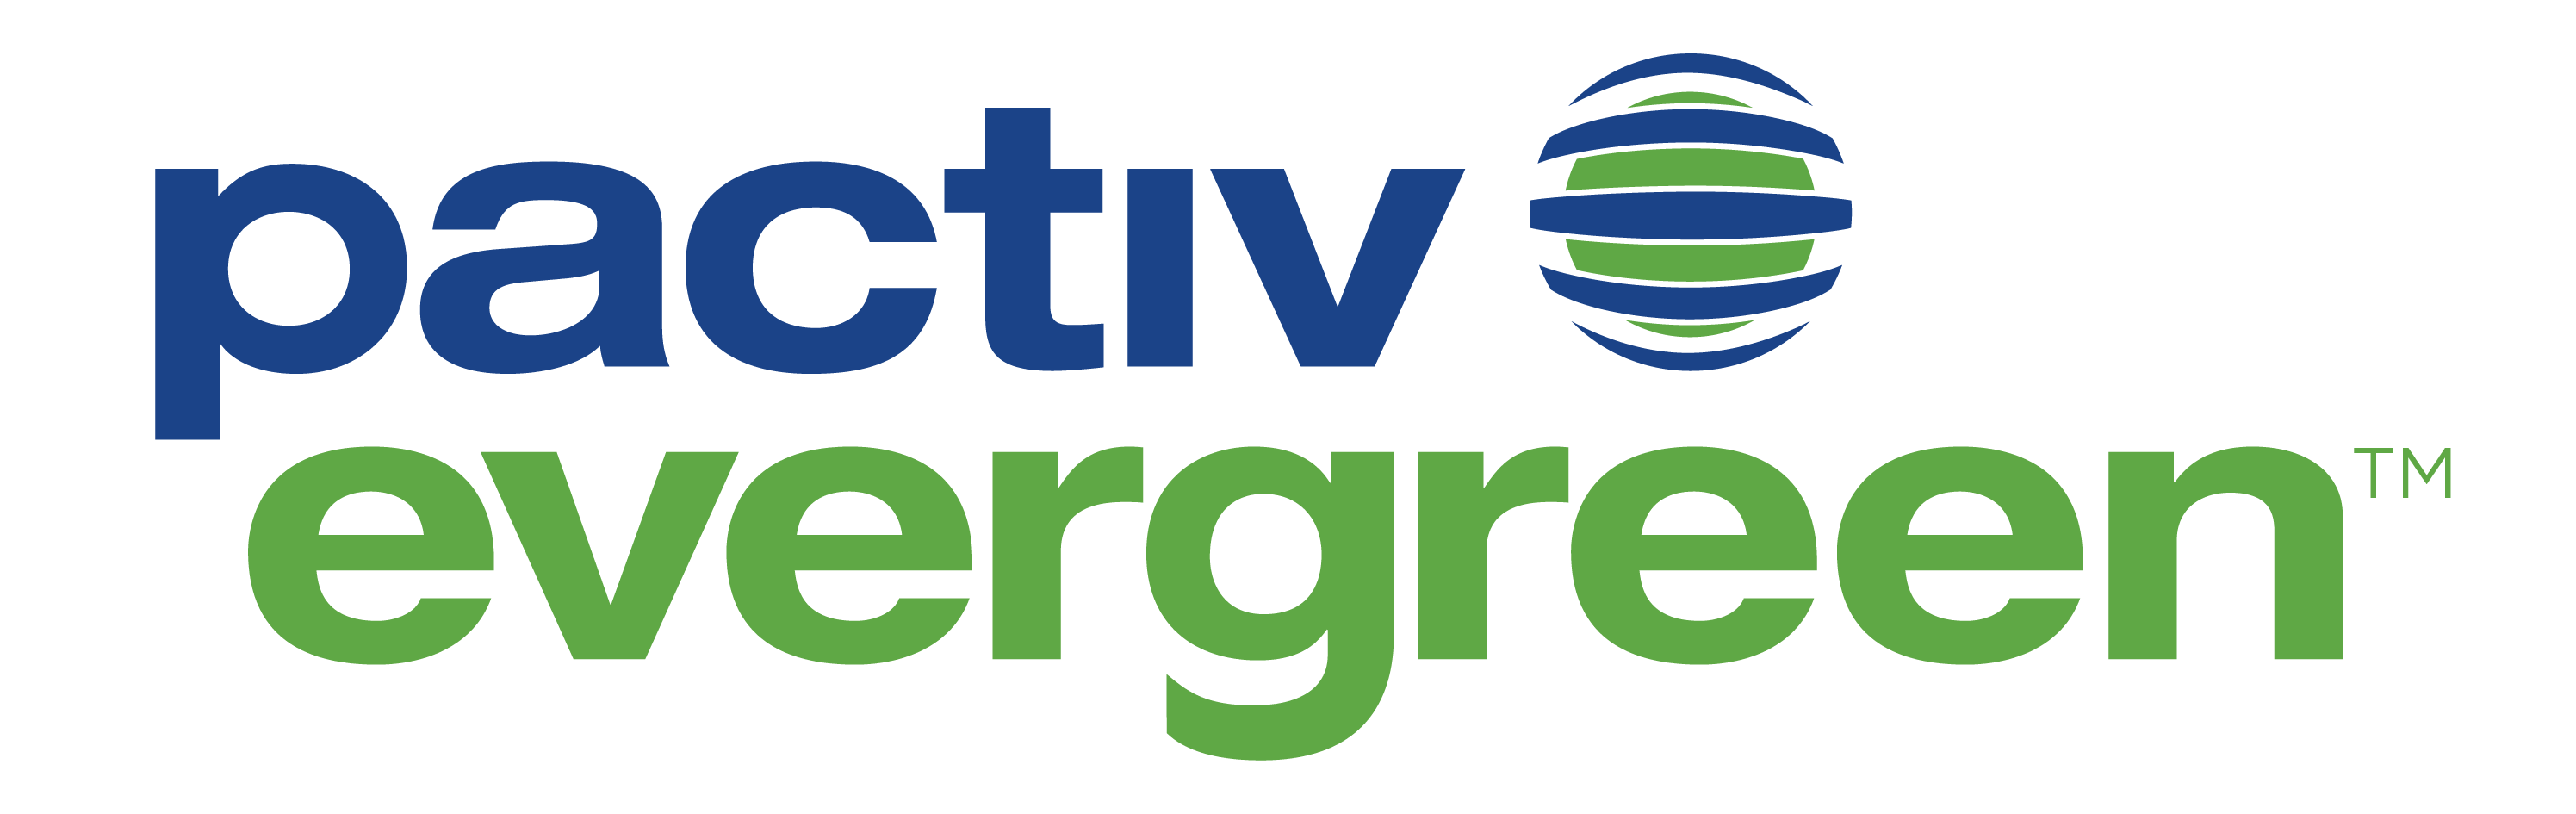 Pactive Evergreen - Pin Sponsor $500